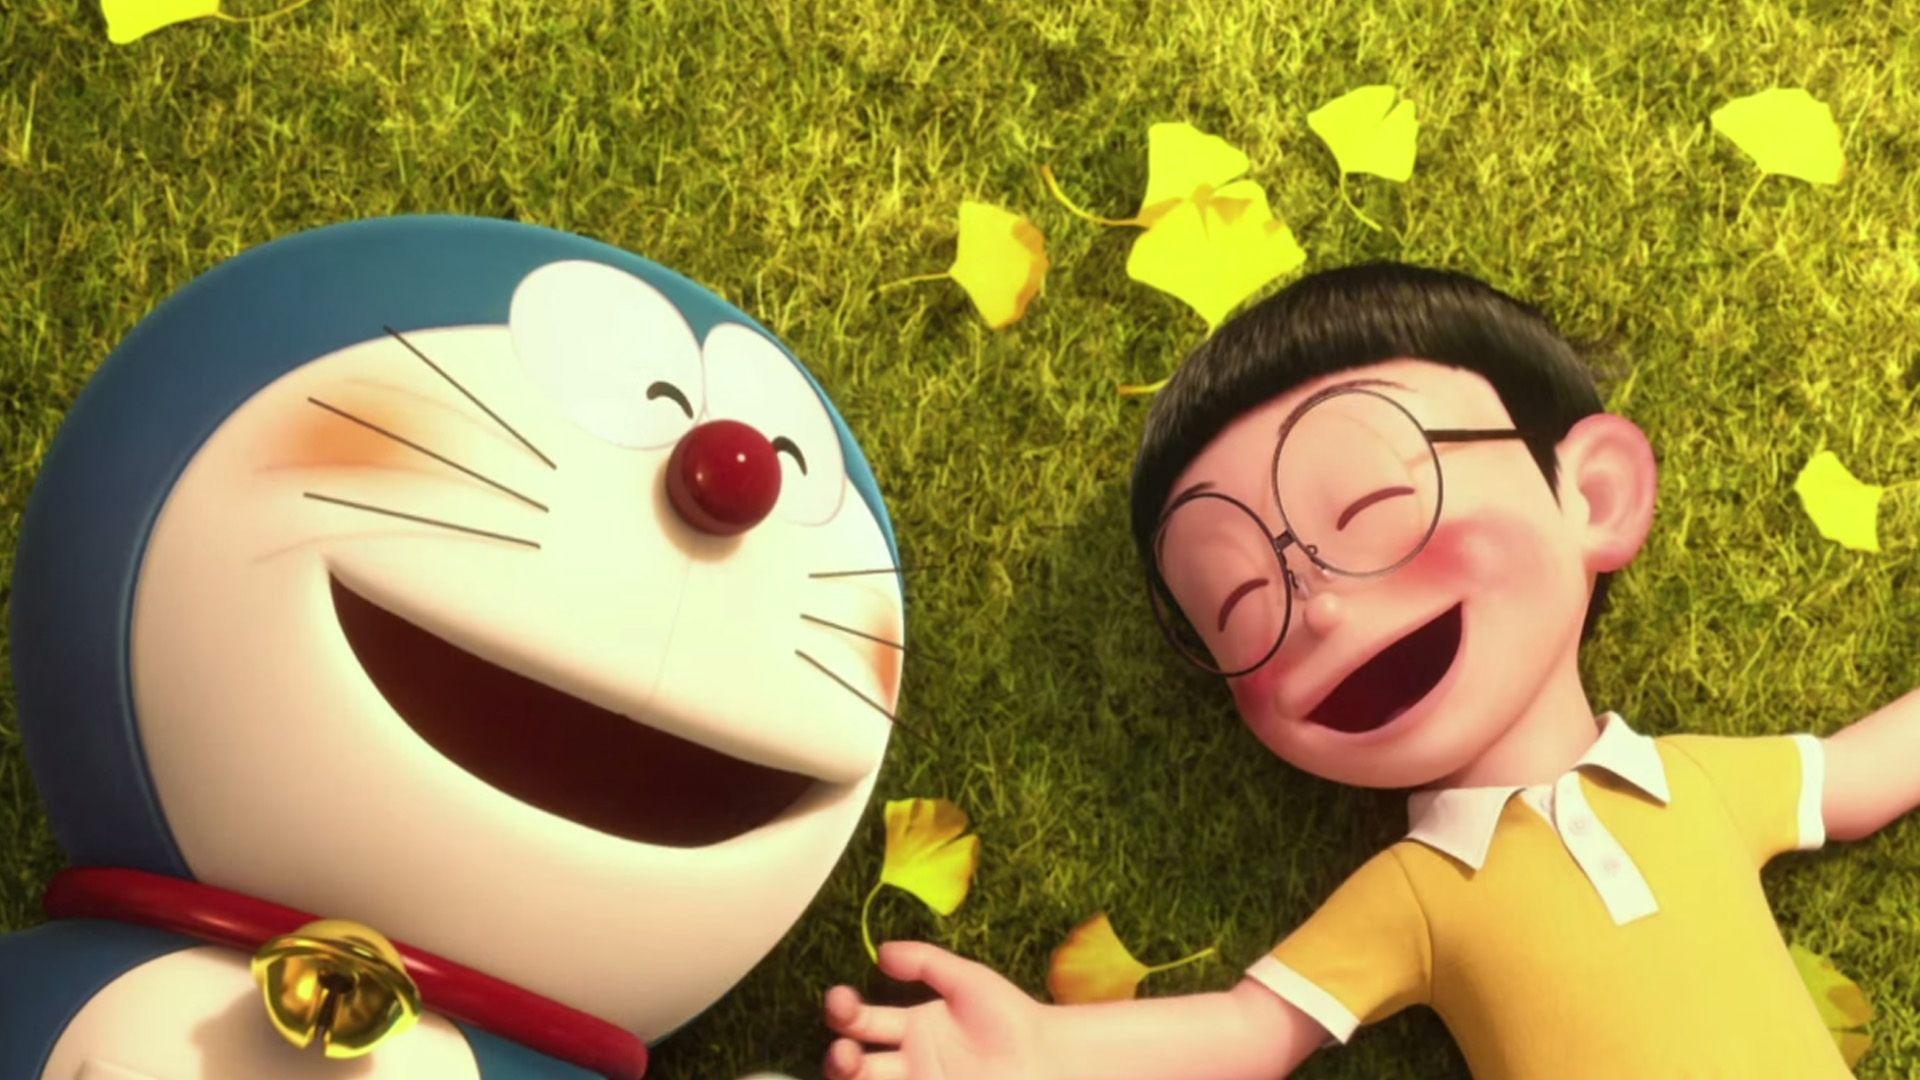 Doraemon And Nobita Wallpapers - Wallpaper Cave